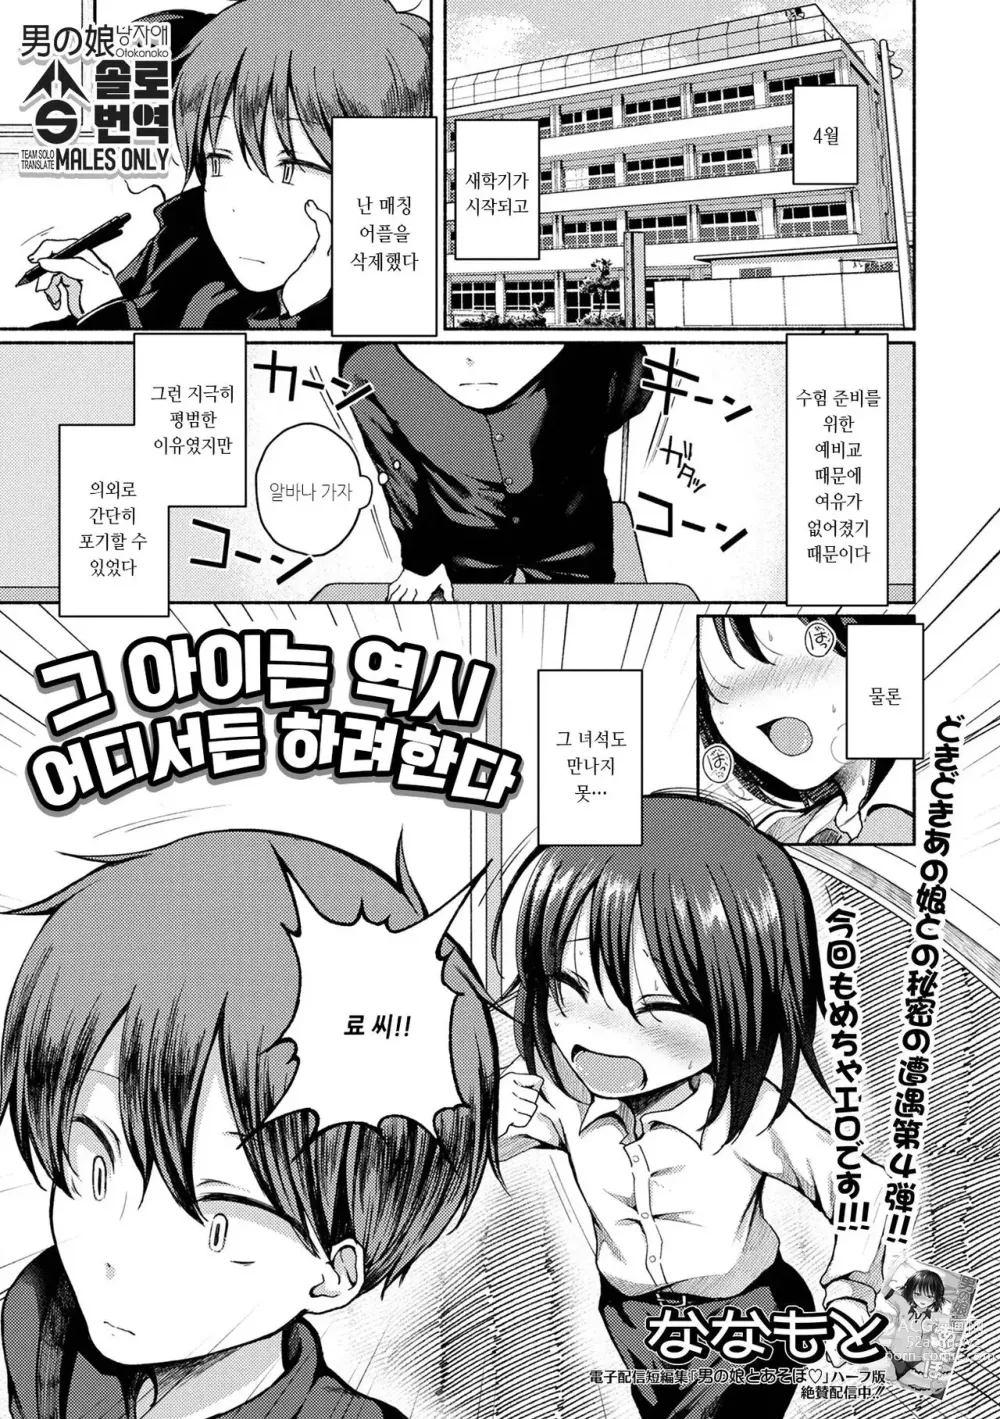 Page 1 of manga 그 아이는 역시 어디서든 하려한다...4